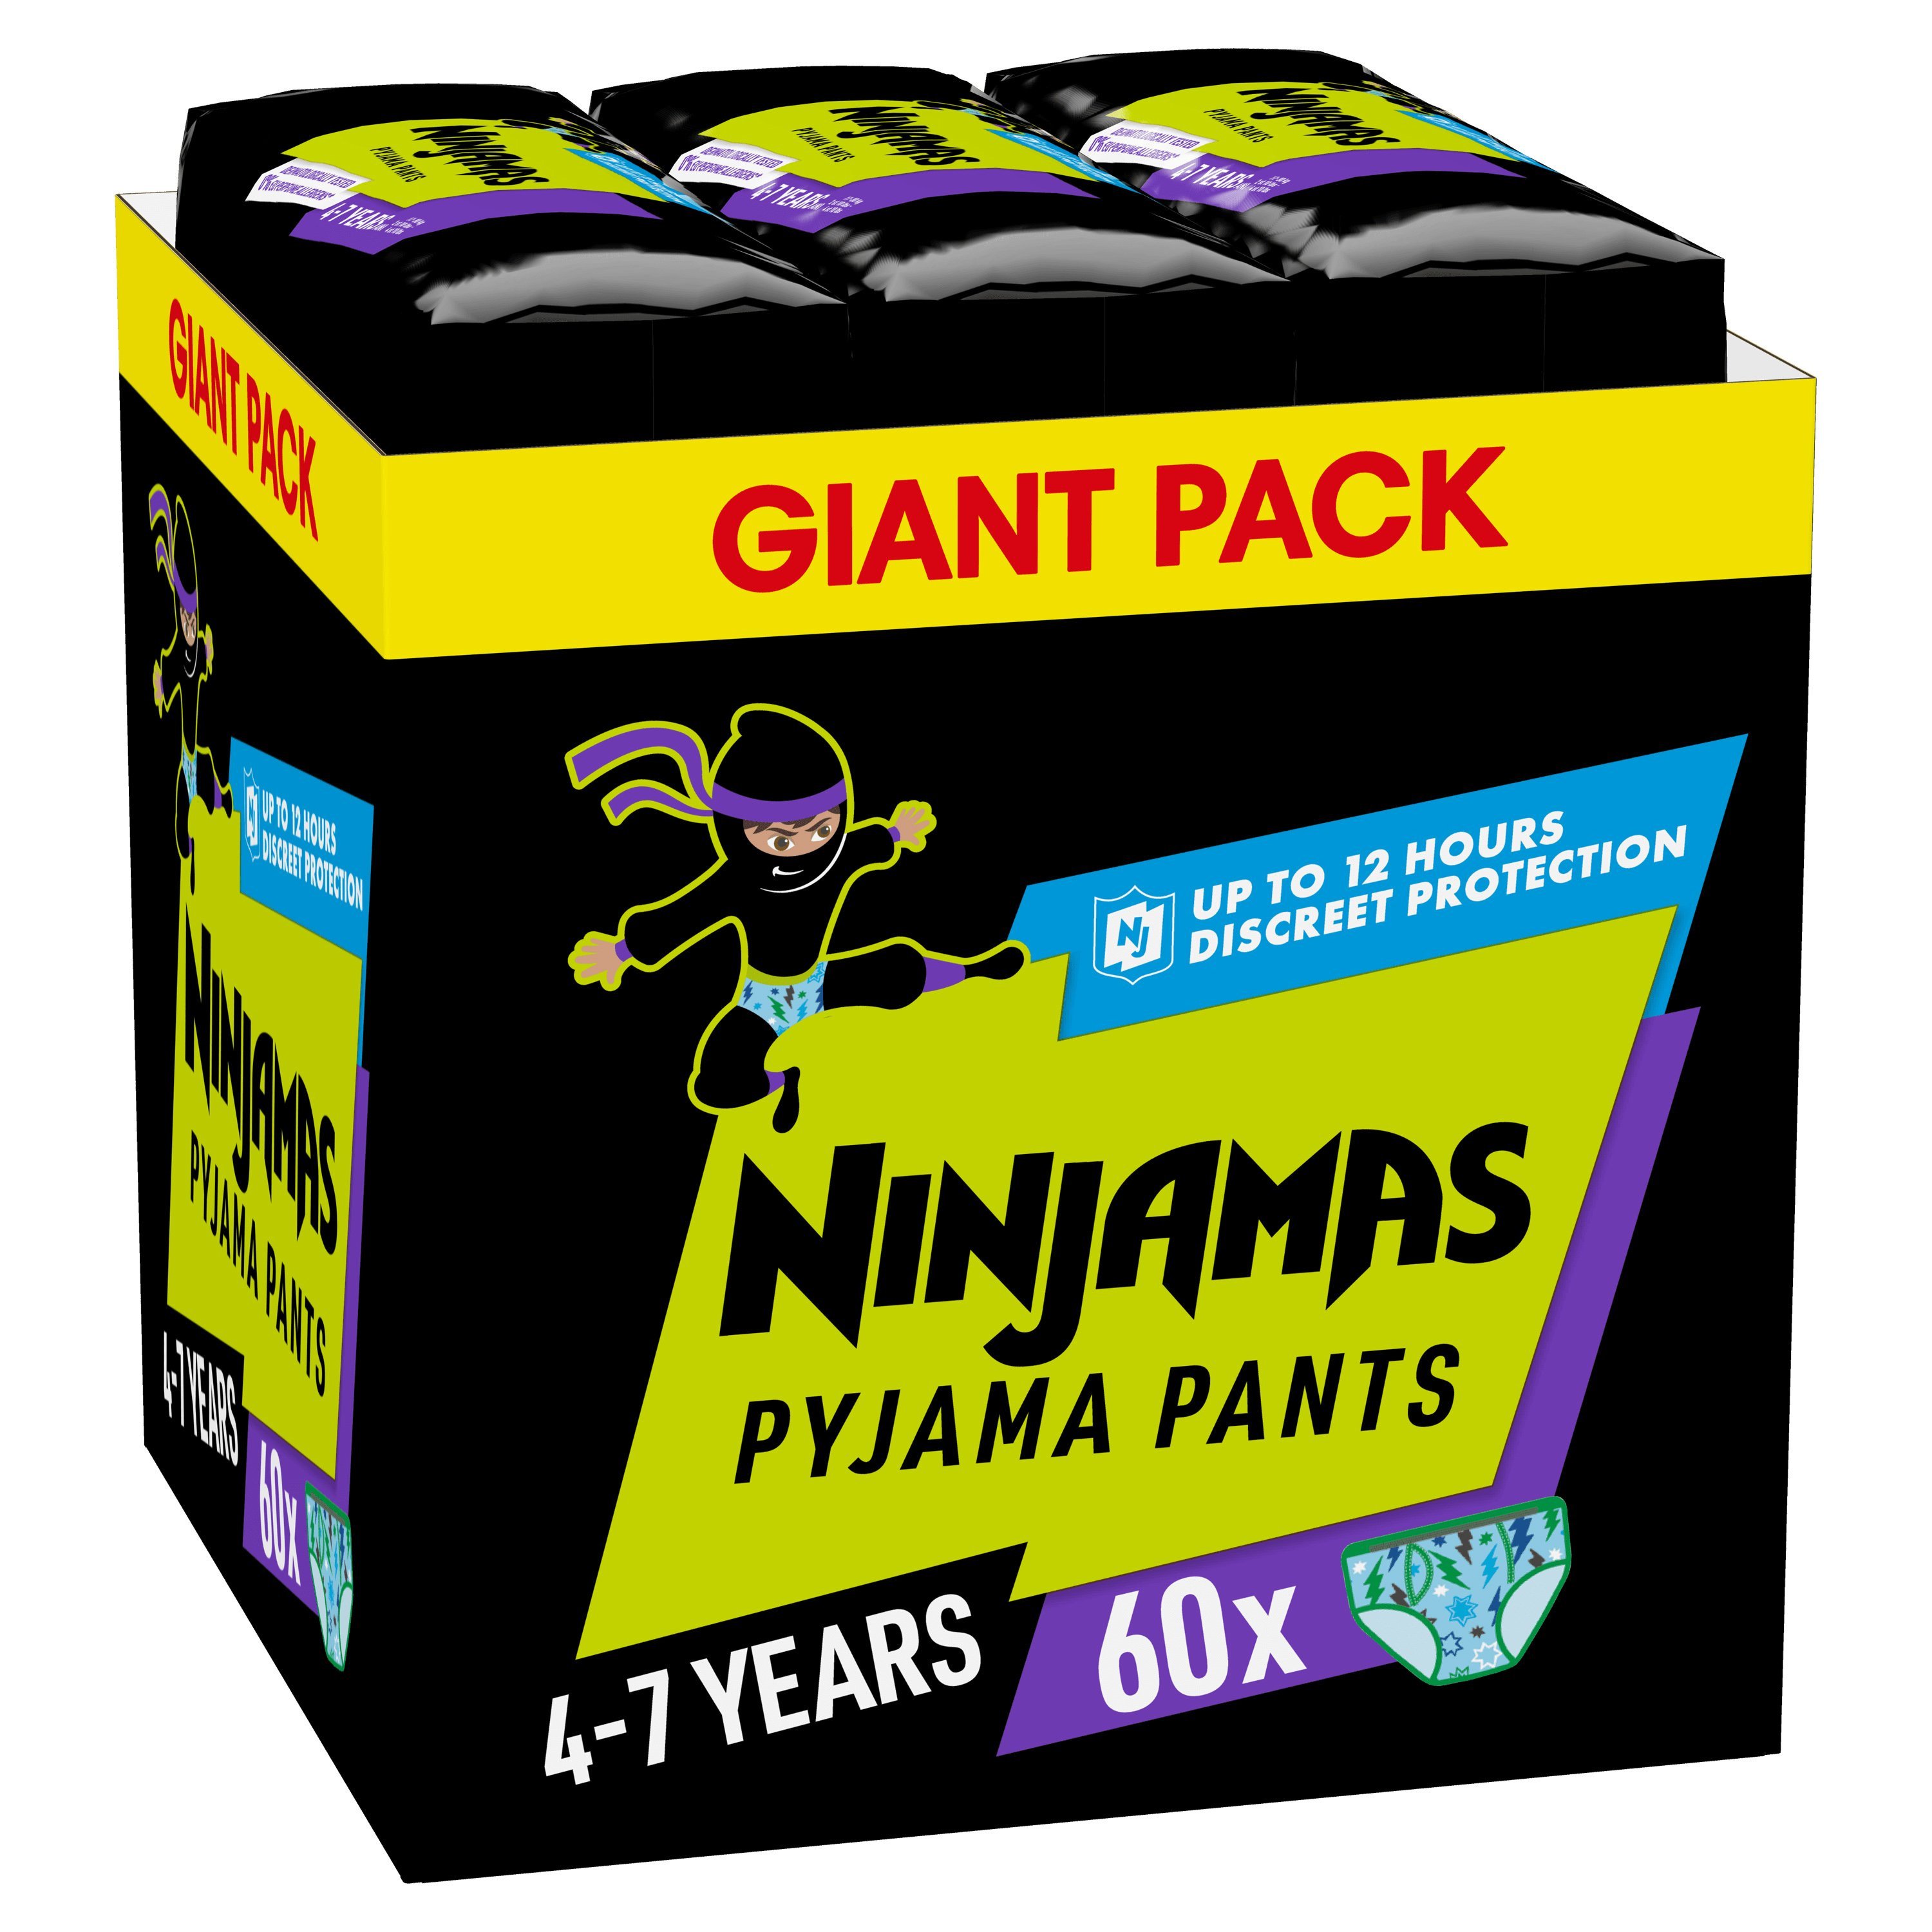 Ninjamas Pyjama Pants Boy 4-7 Years (17-30kg) Monthly Pack Πάνες Βρακάκι Νυκτός για Αγόρια από 4-7 Ετών 60 Τεμάχια